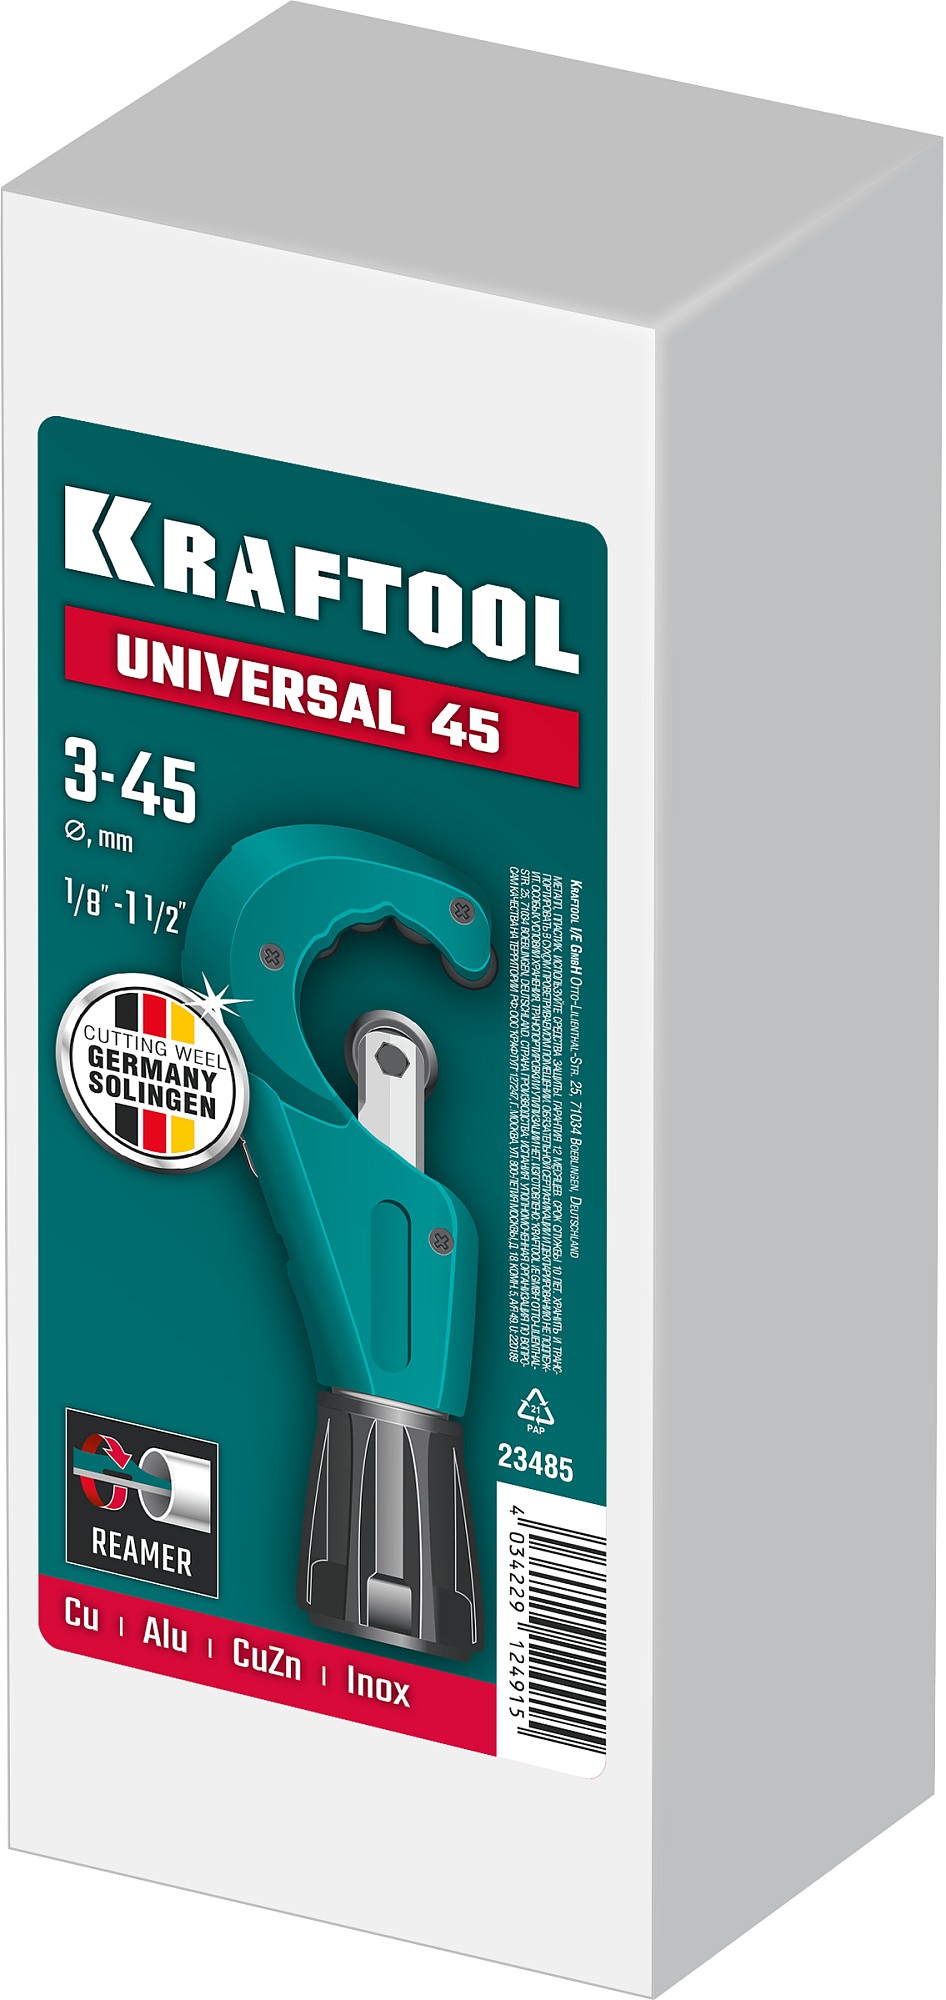 KRAFTOOL Universal-45, 3 - 45 мм, труборез для меди и алюминия (23485)